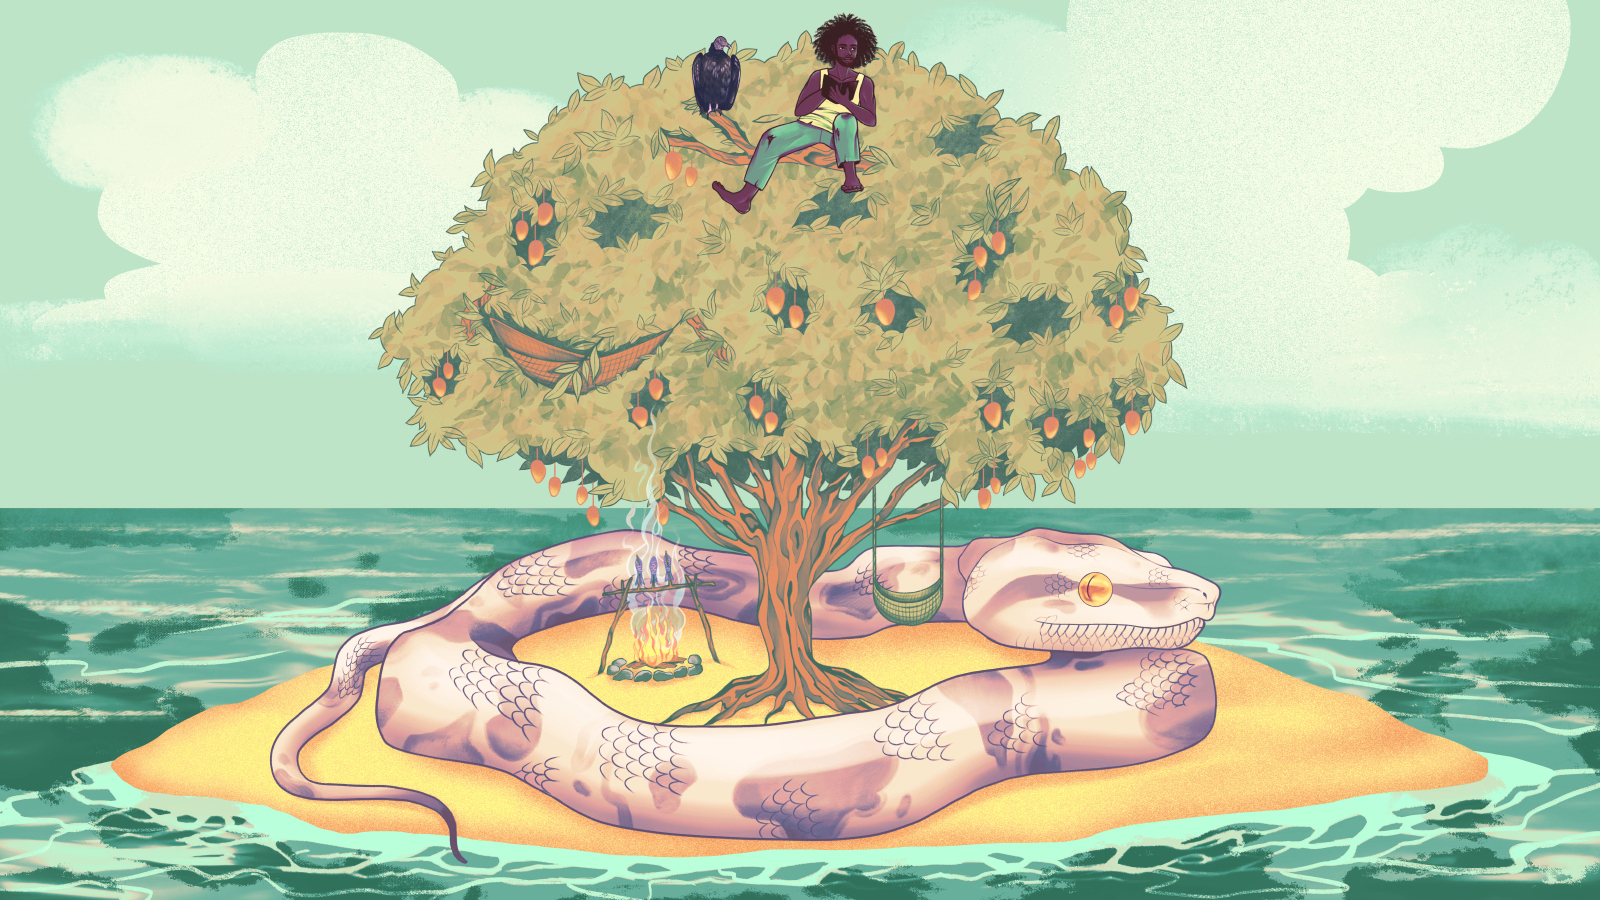 Illustration of Black man sitting in tree on small island